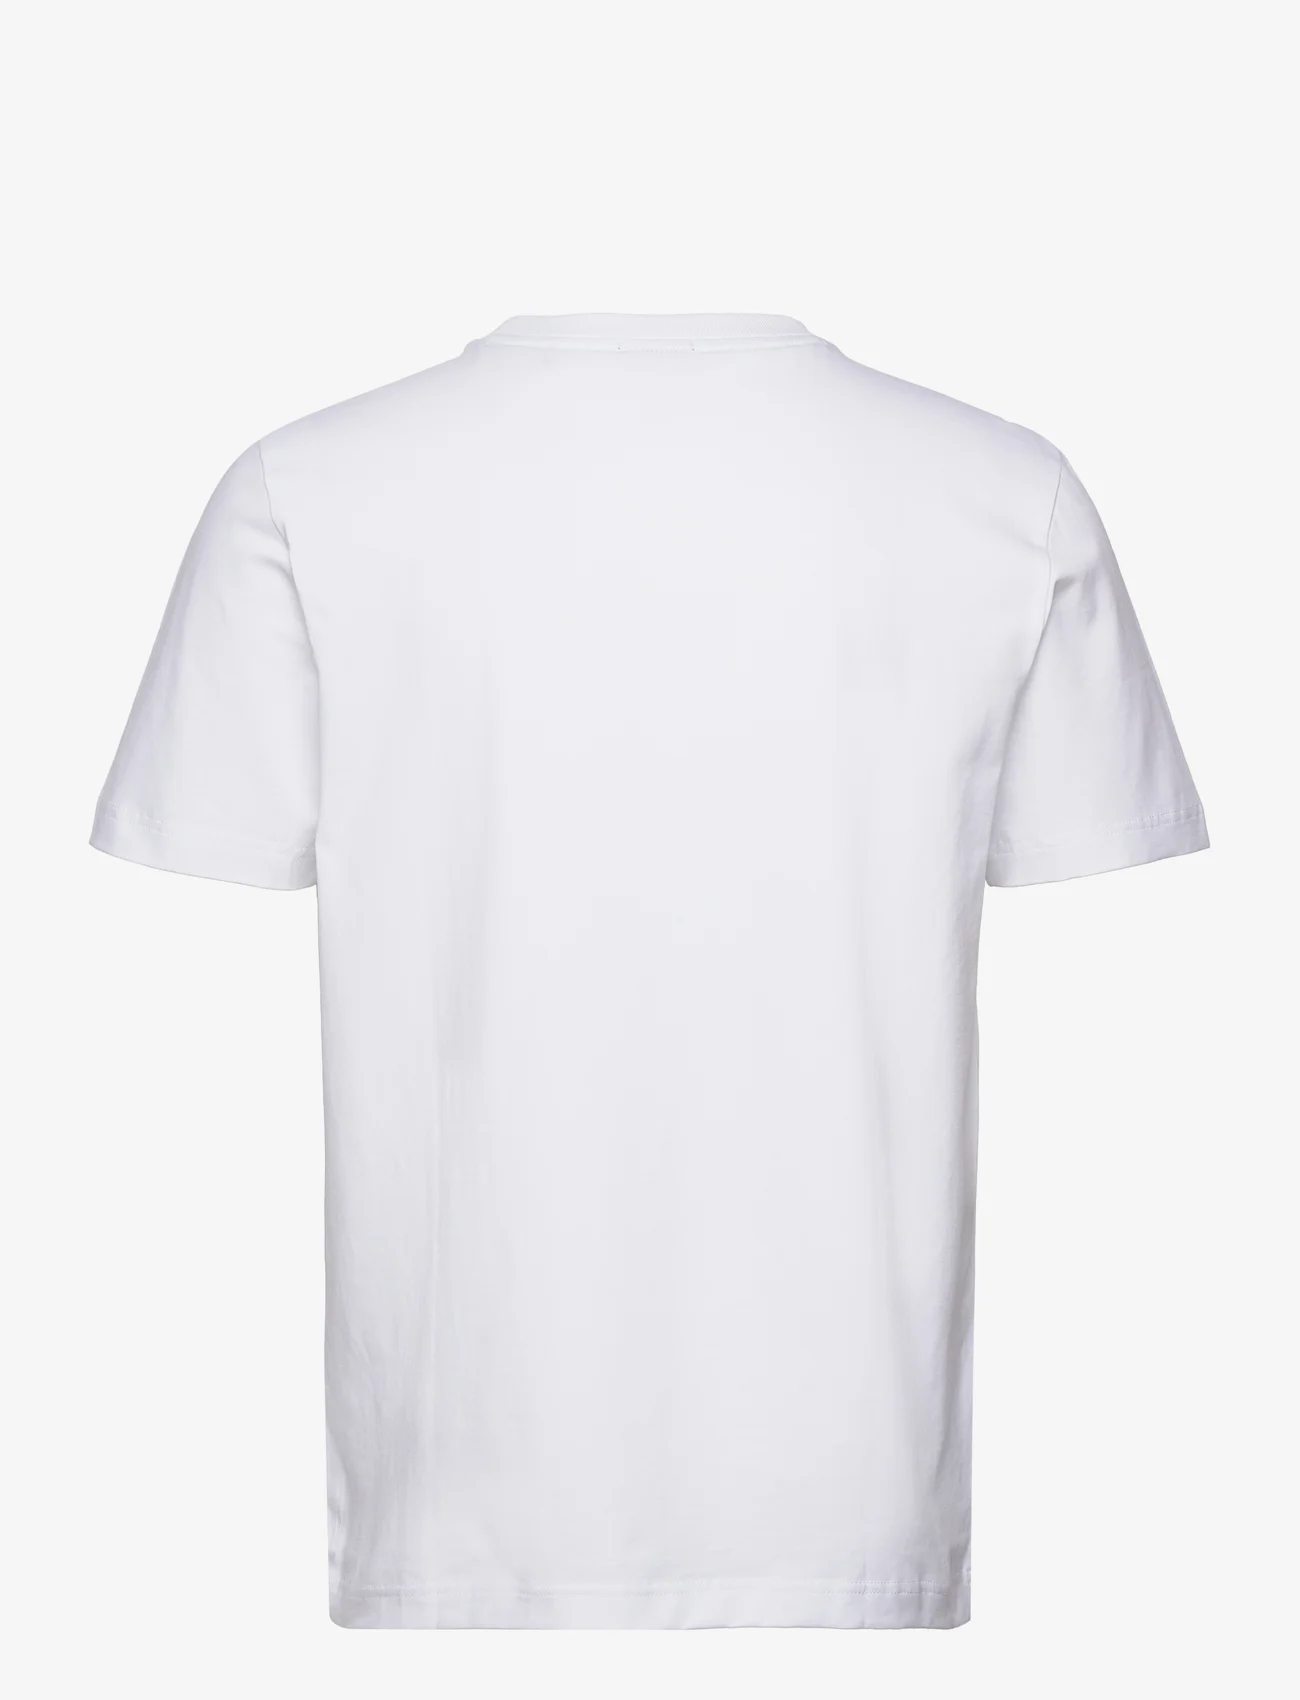 BOSS - Tee 8 - short-sleeved t-shirts - white - 1